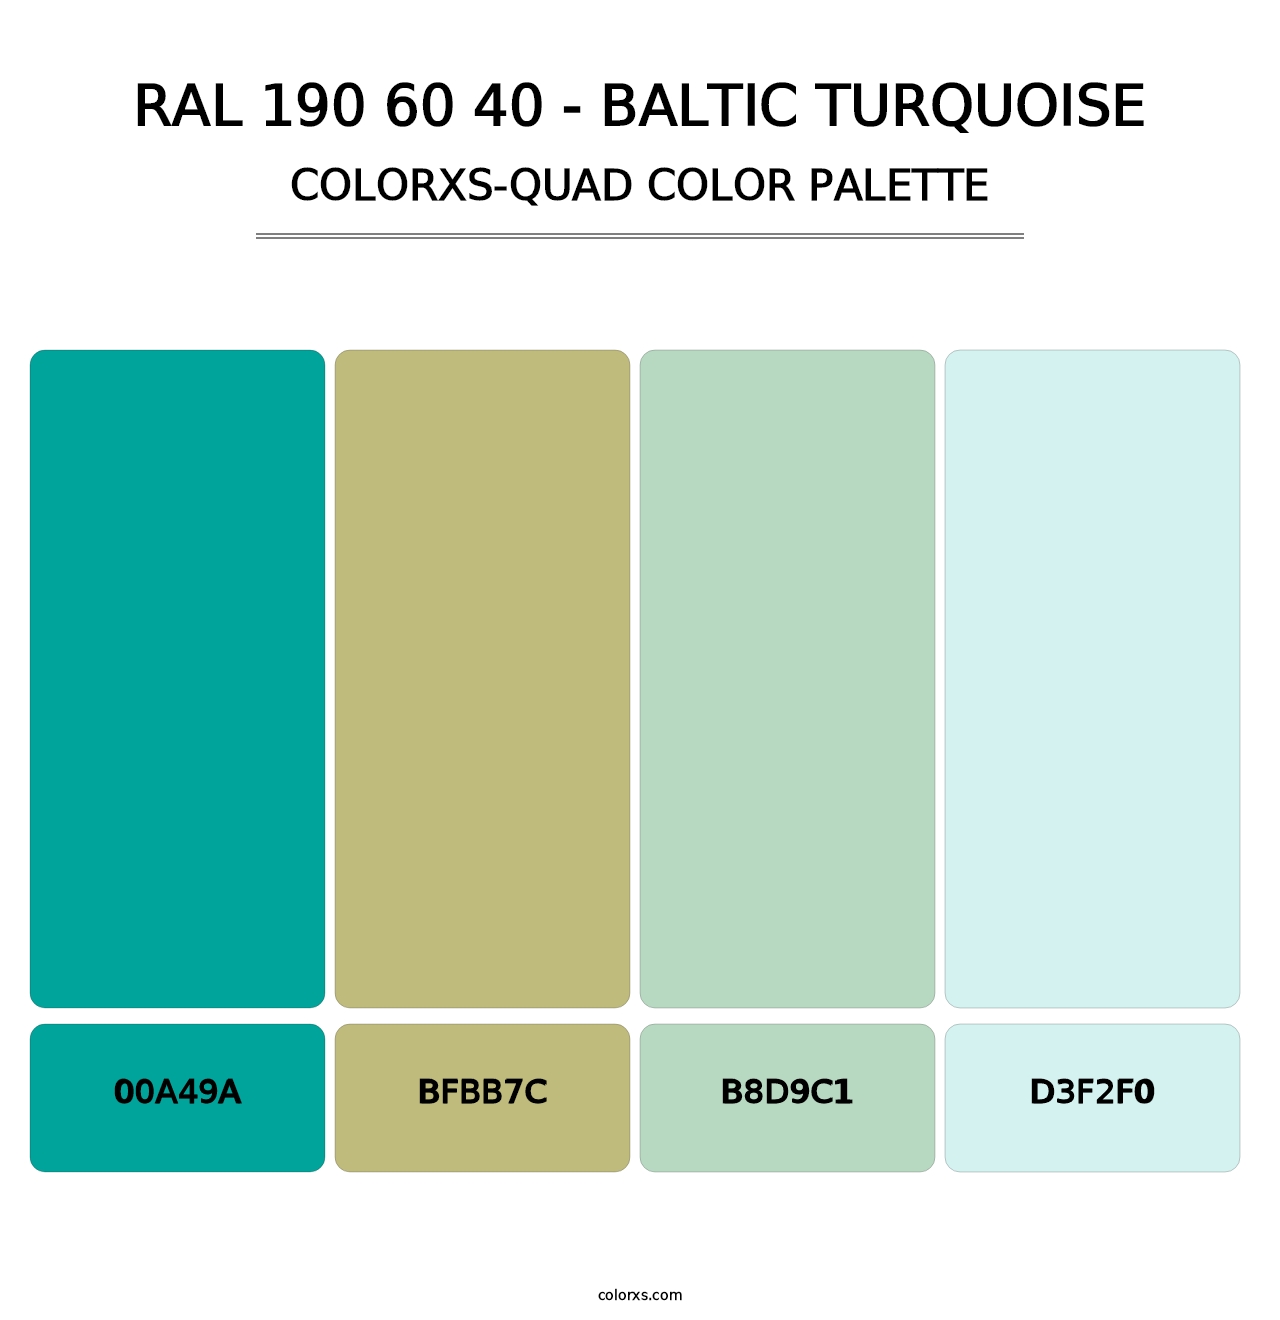 RAL 190 60 40 - Baltic Turquoise - Colorxs Quad Palette